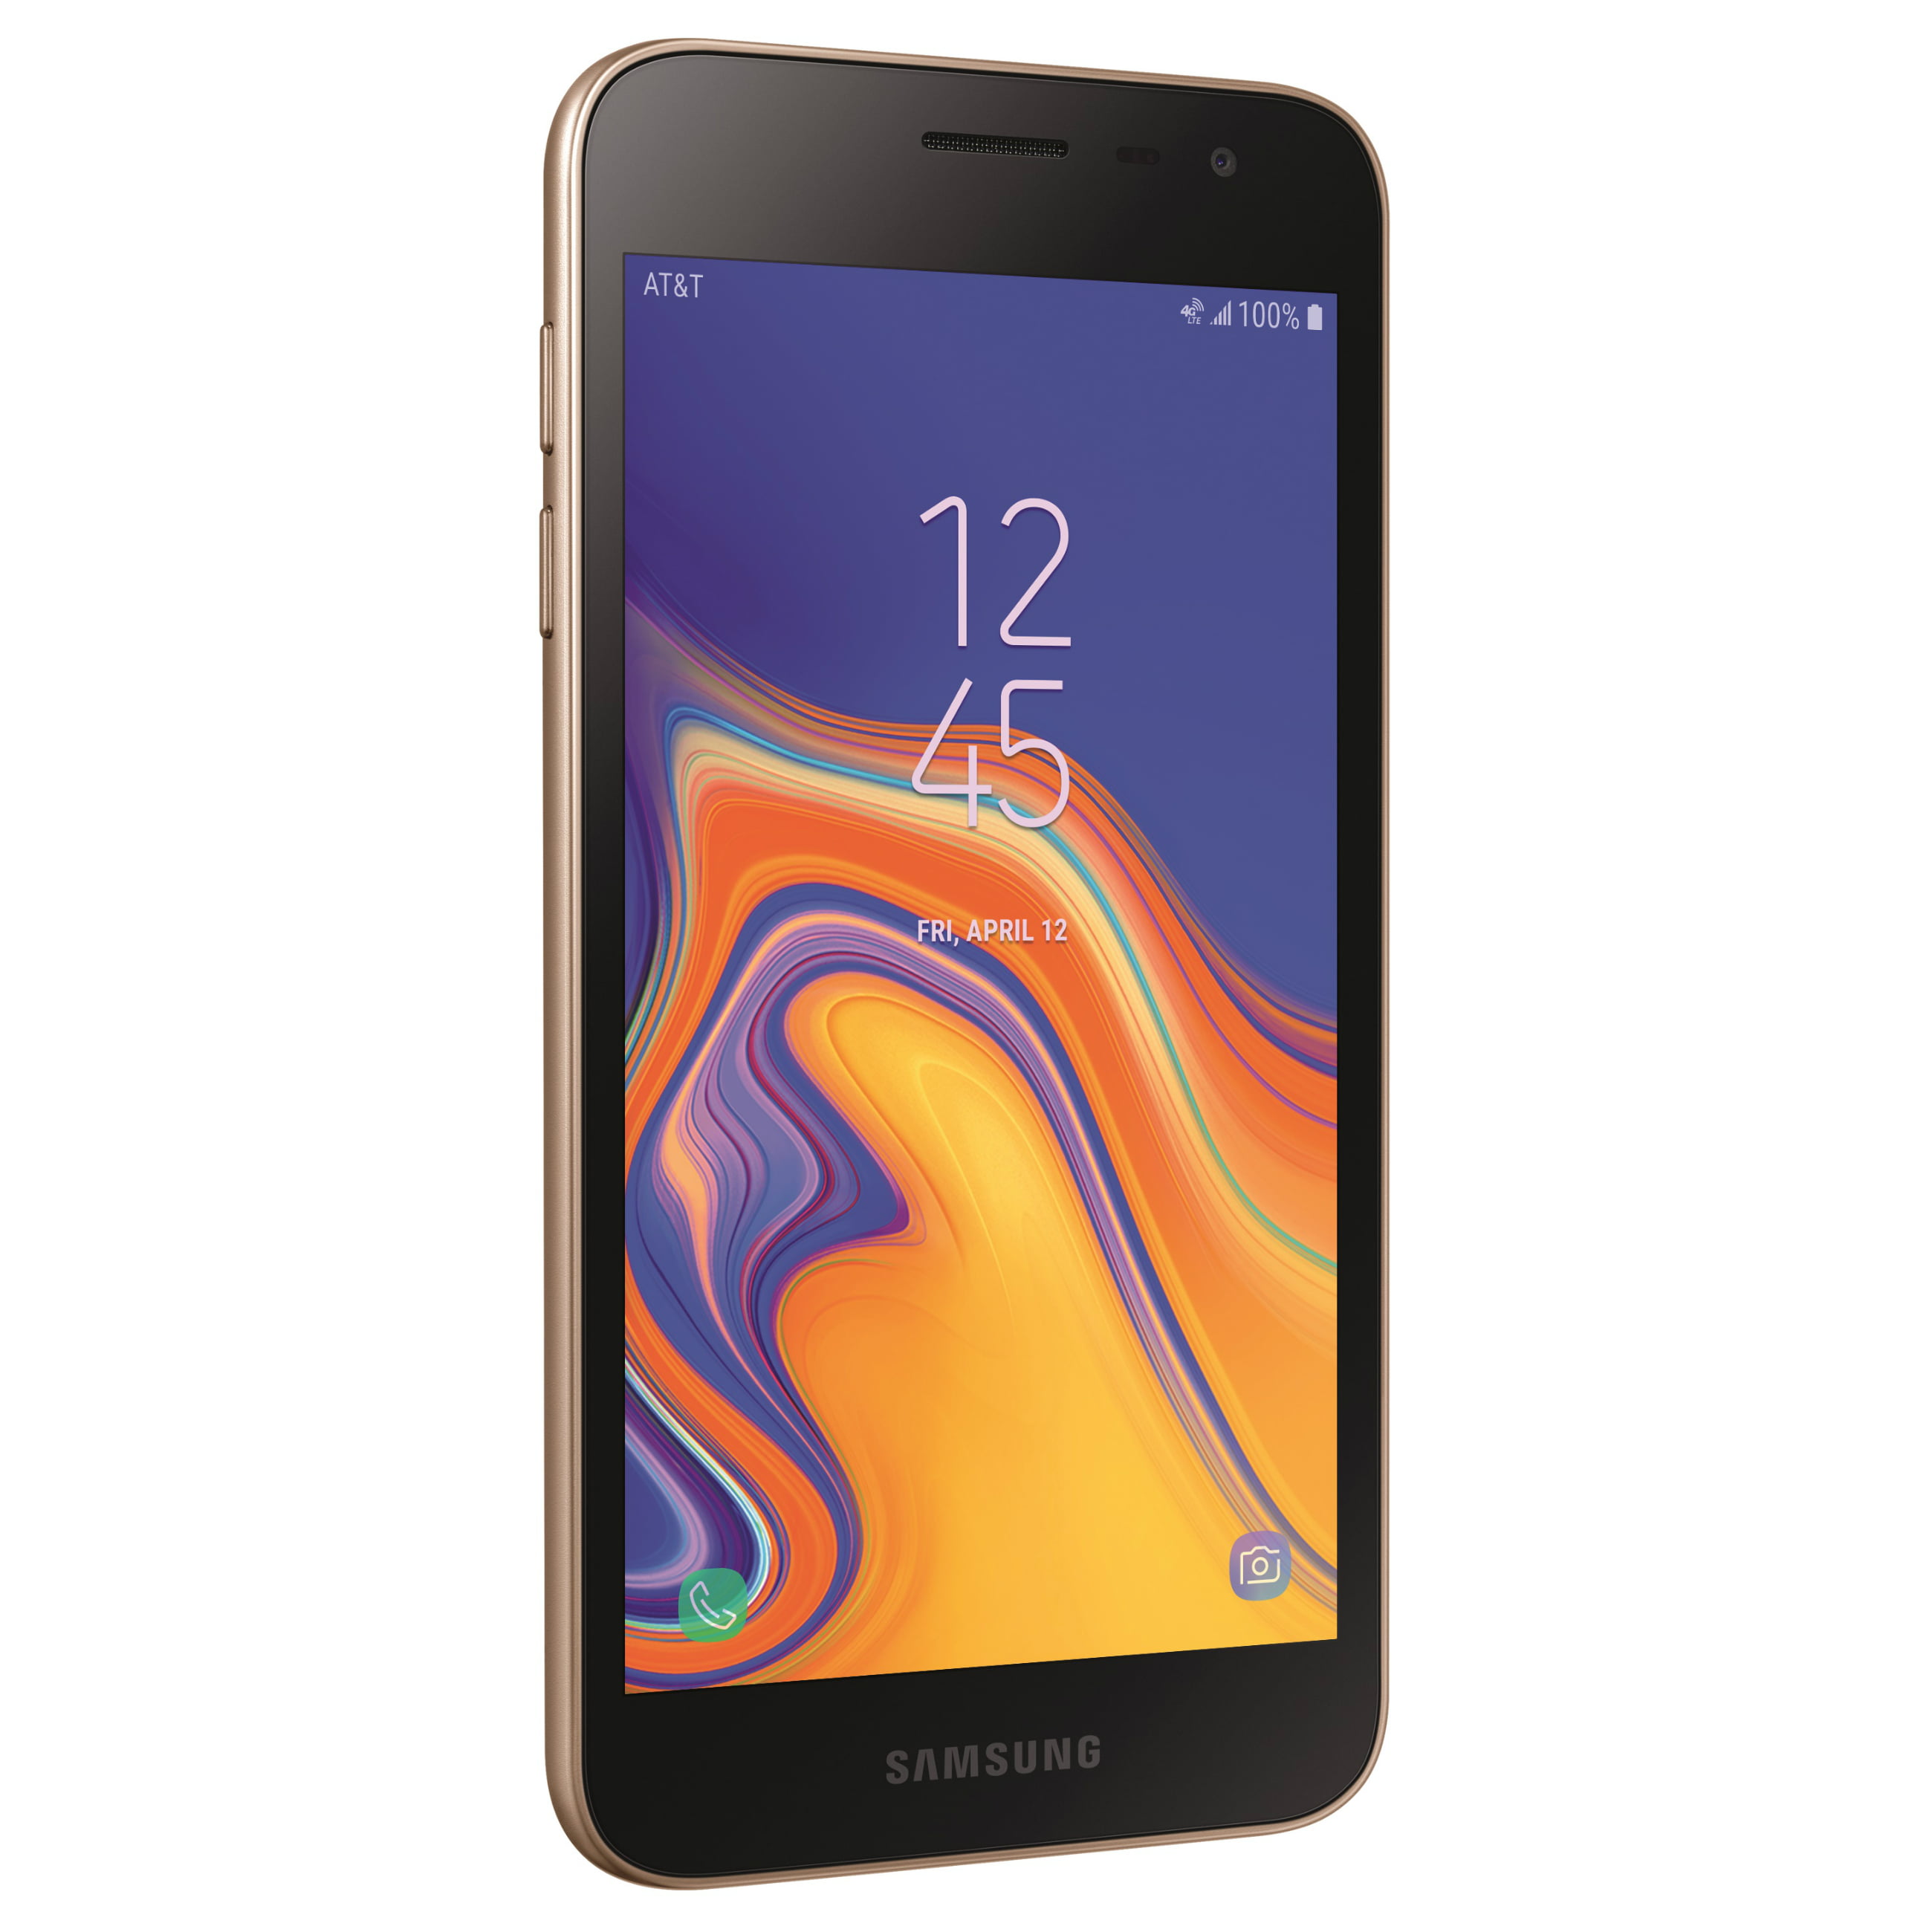 At T Prepaid Samsung Galaxy J2 Shine 16gb Gold Prepaid Smartphone W Bonus Headset Walmart Com Walmart Com